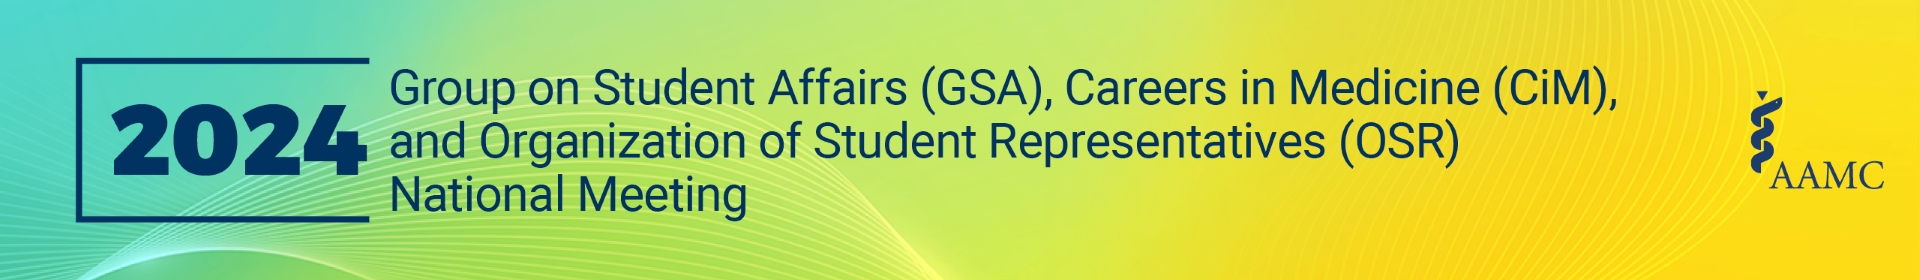 2024 GSA-CiM-OSR National Meeting Call for Proposals Event Banner